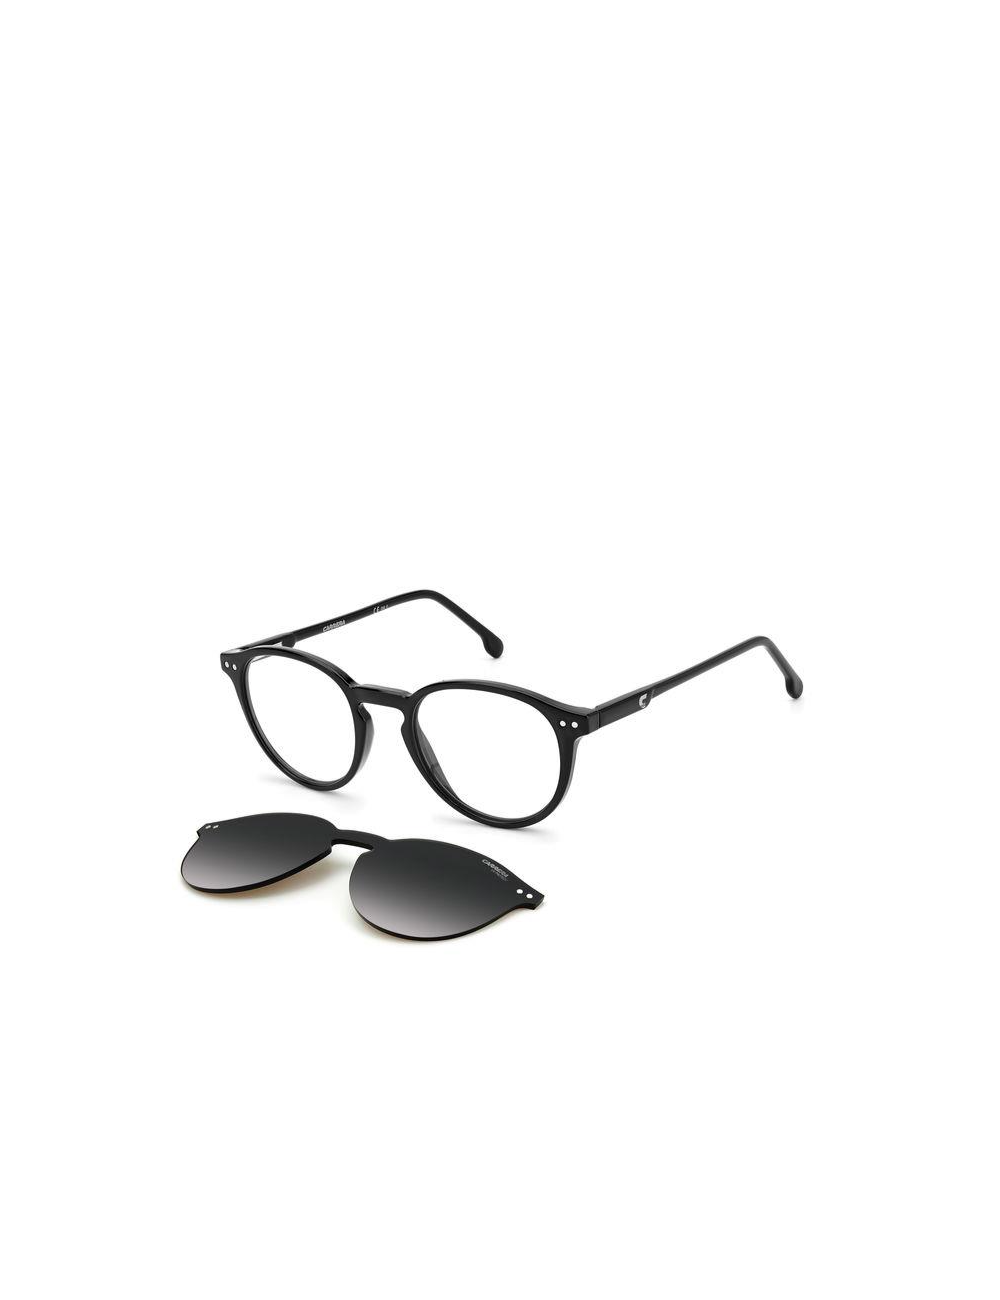 Arriba 65+ imagen carrera eyeglasses replacement parts - Thptnganamst ...